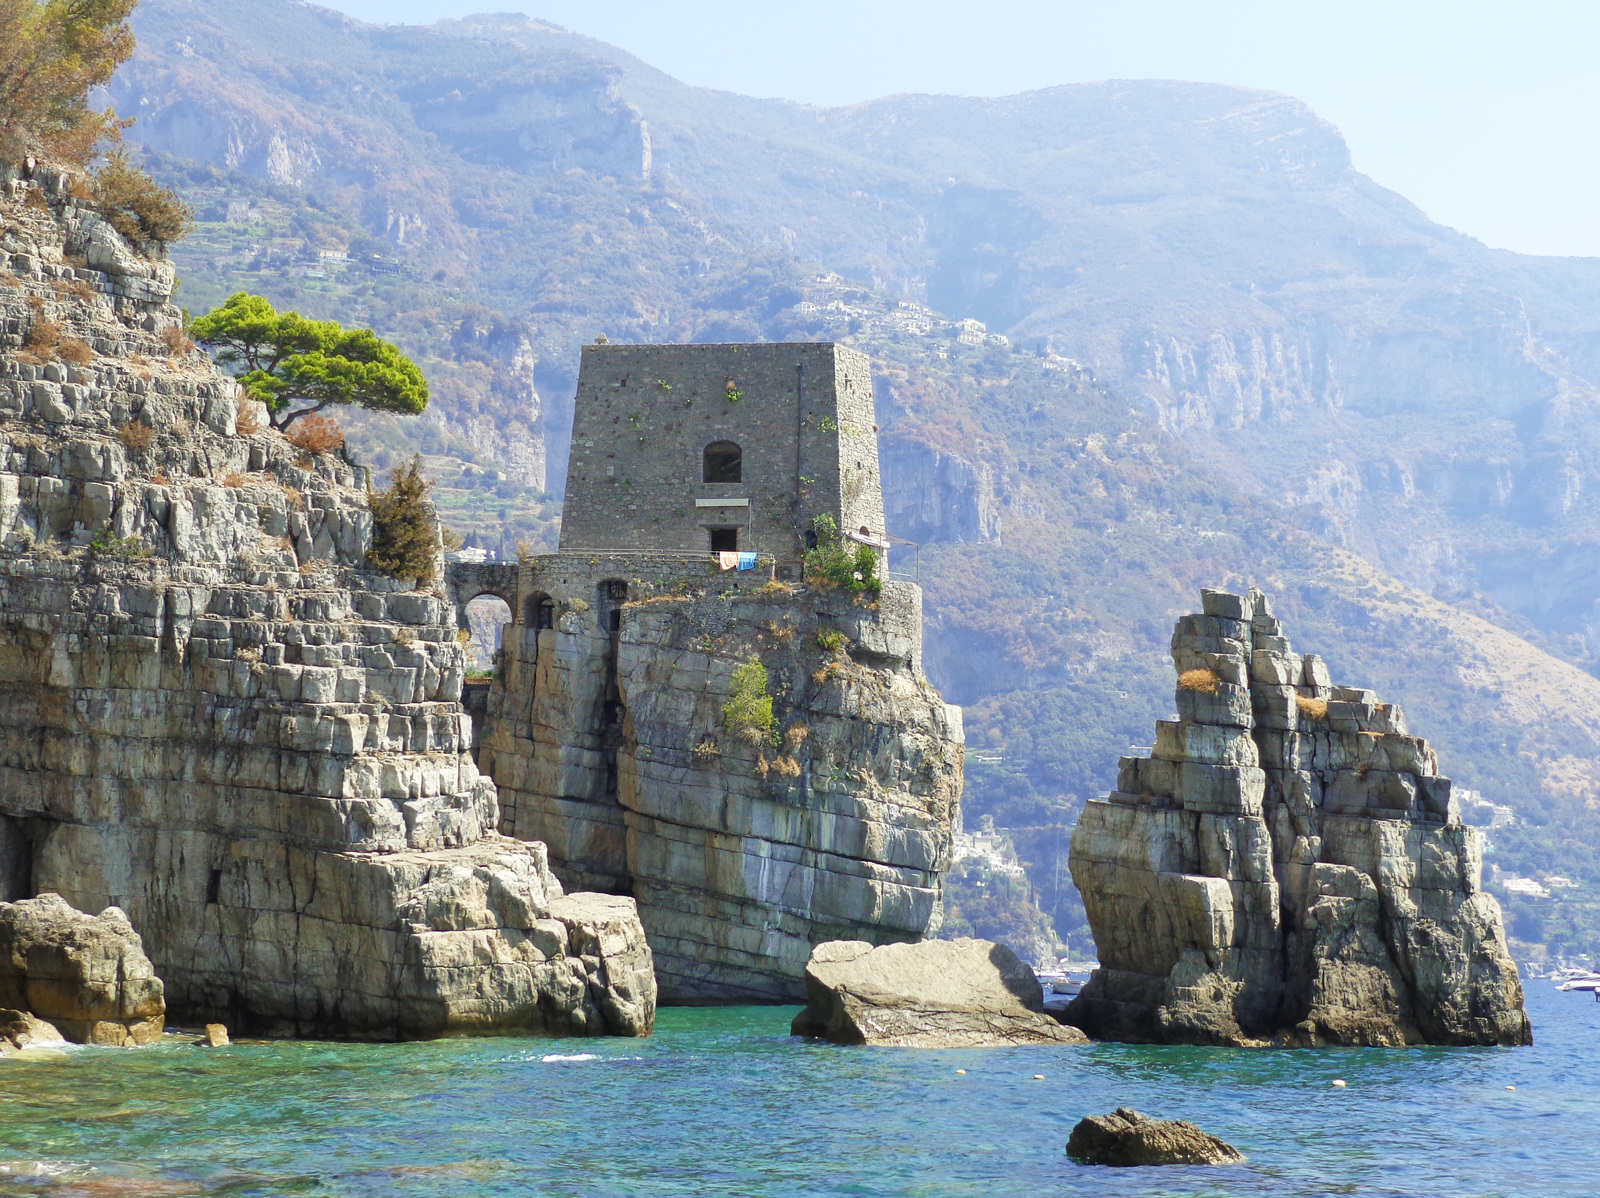 Old tower in Positano, Amalfy coast, Mediterranean sea